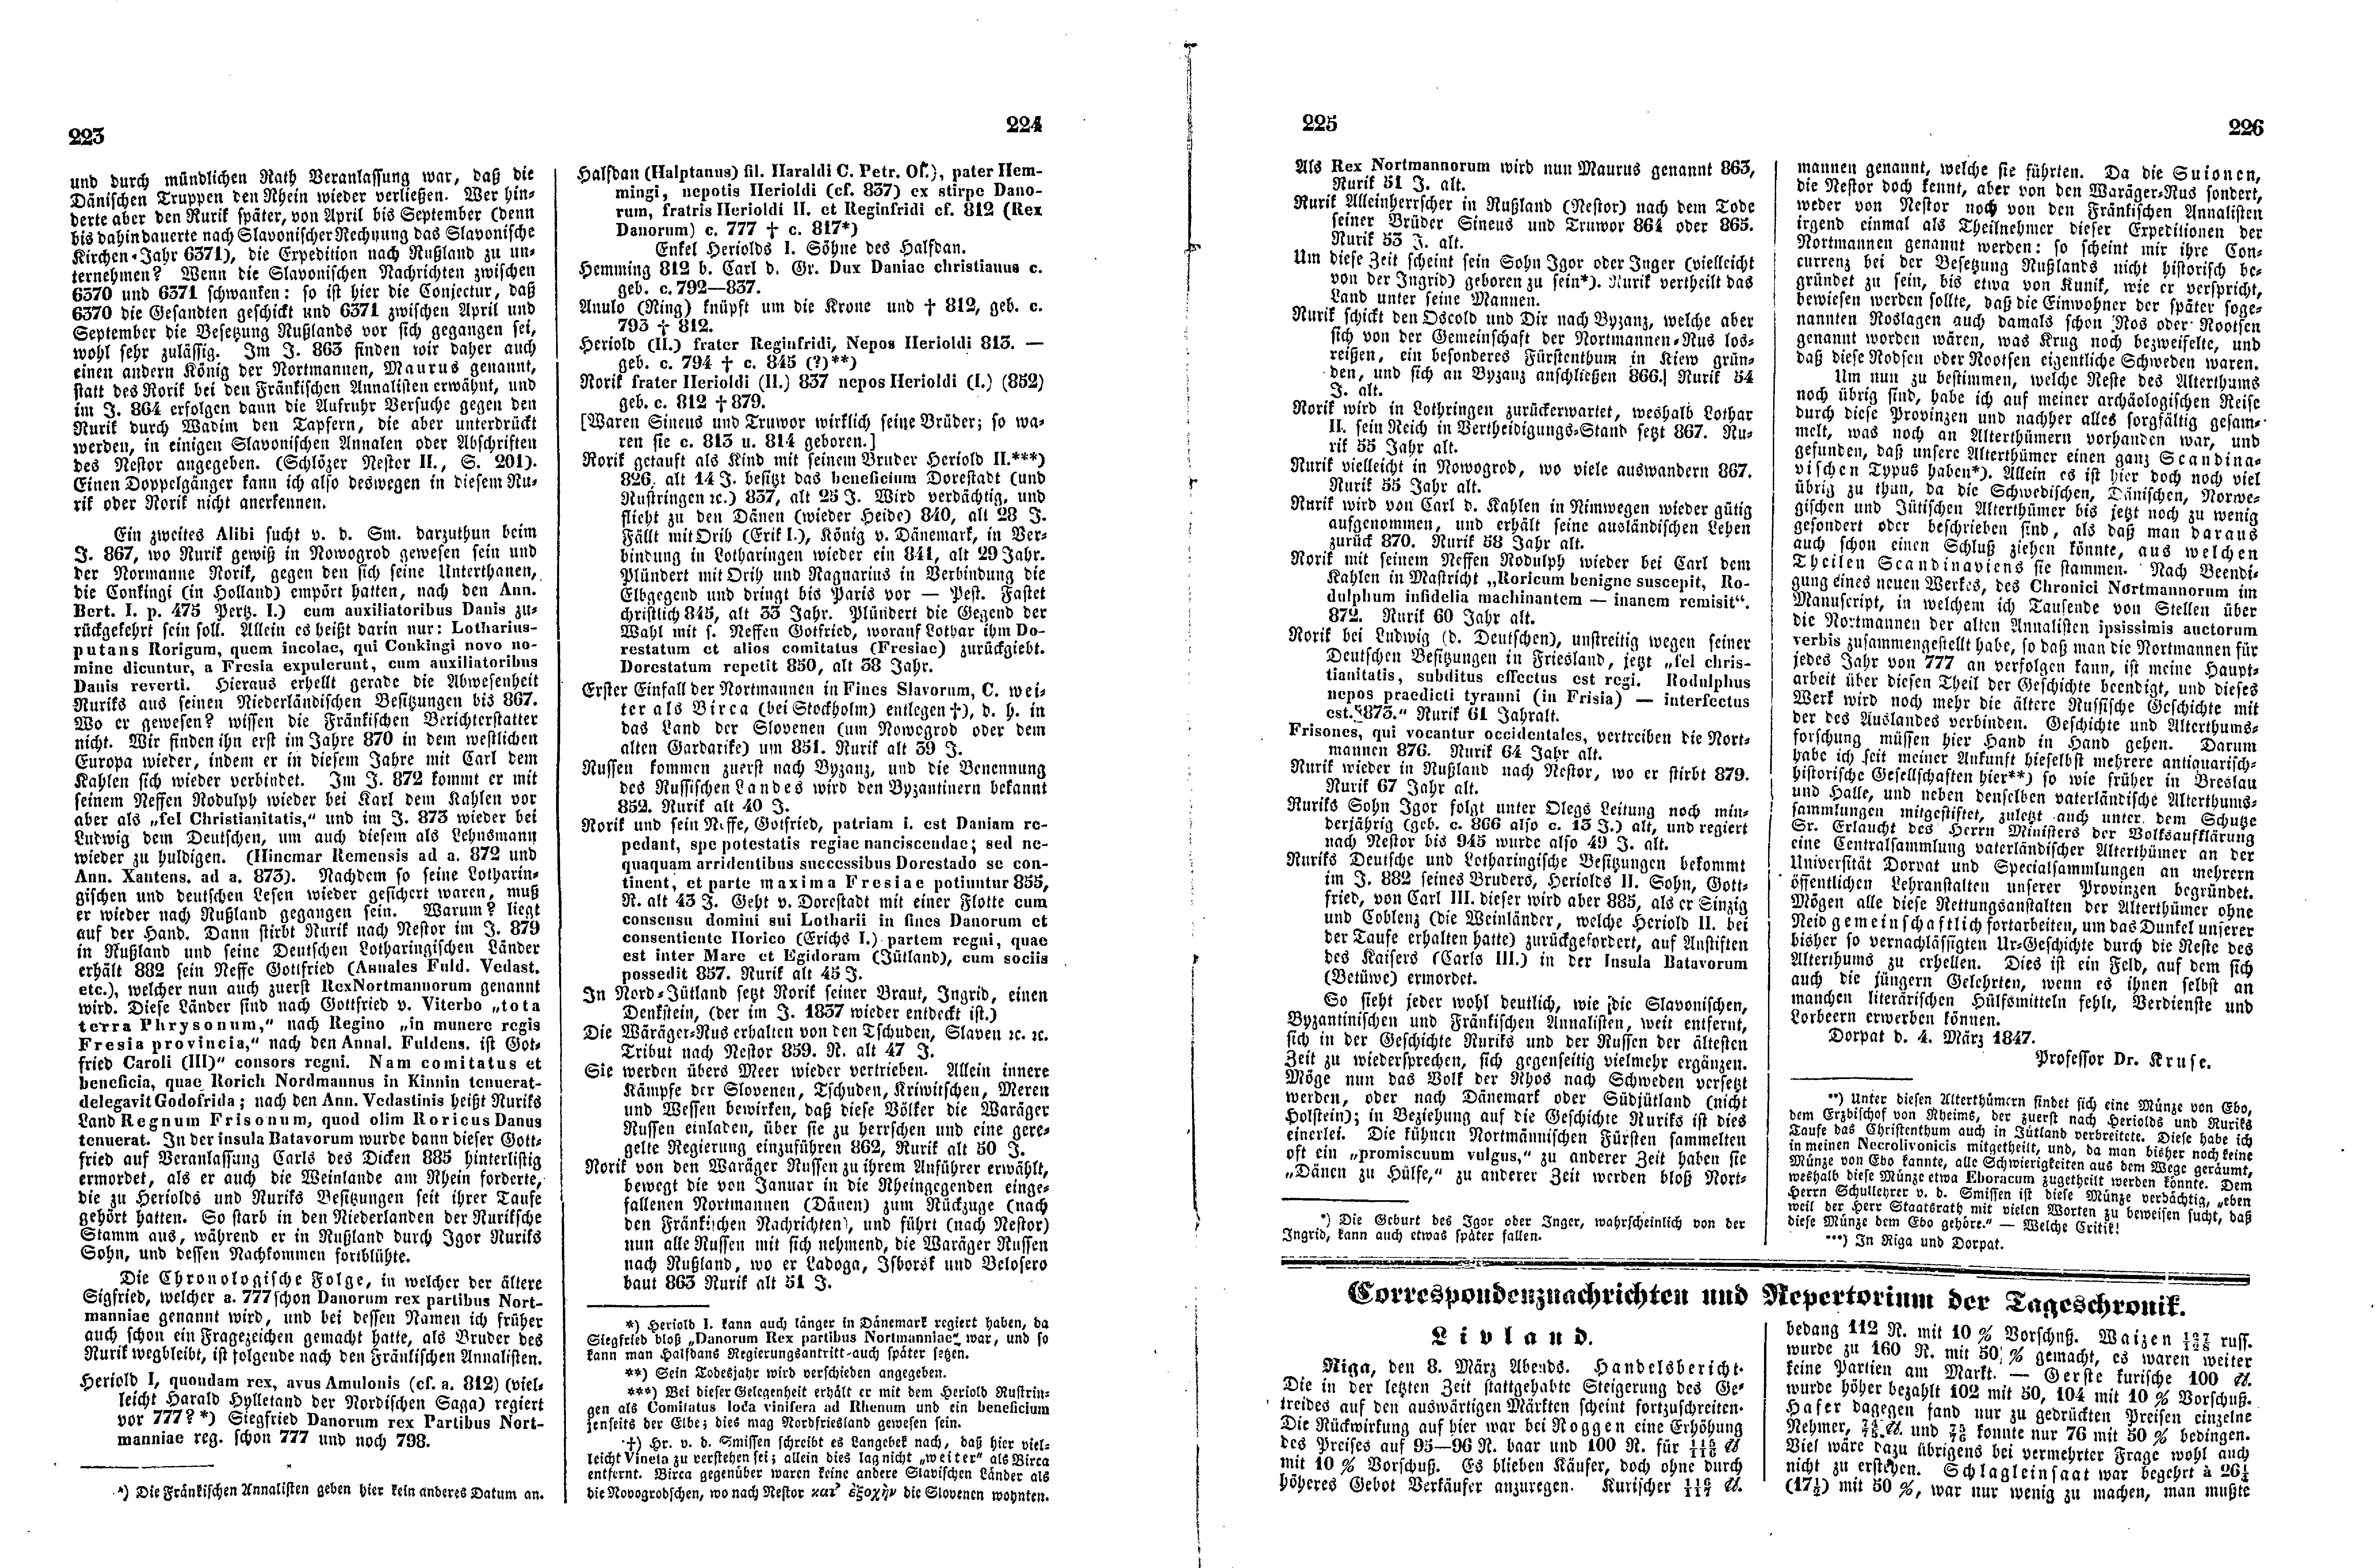 Das Inland [12] (1847) | 61. (223-226) Main body of text